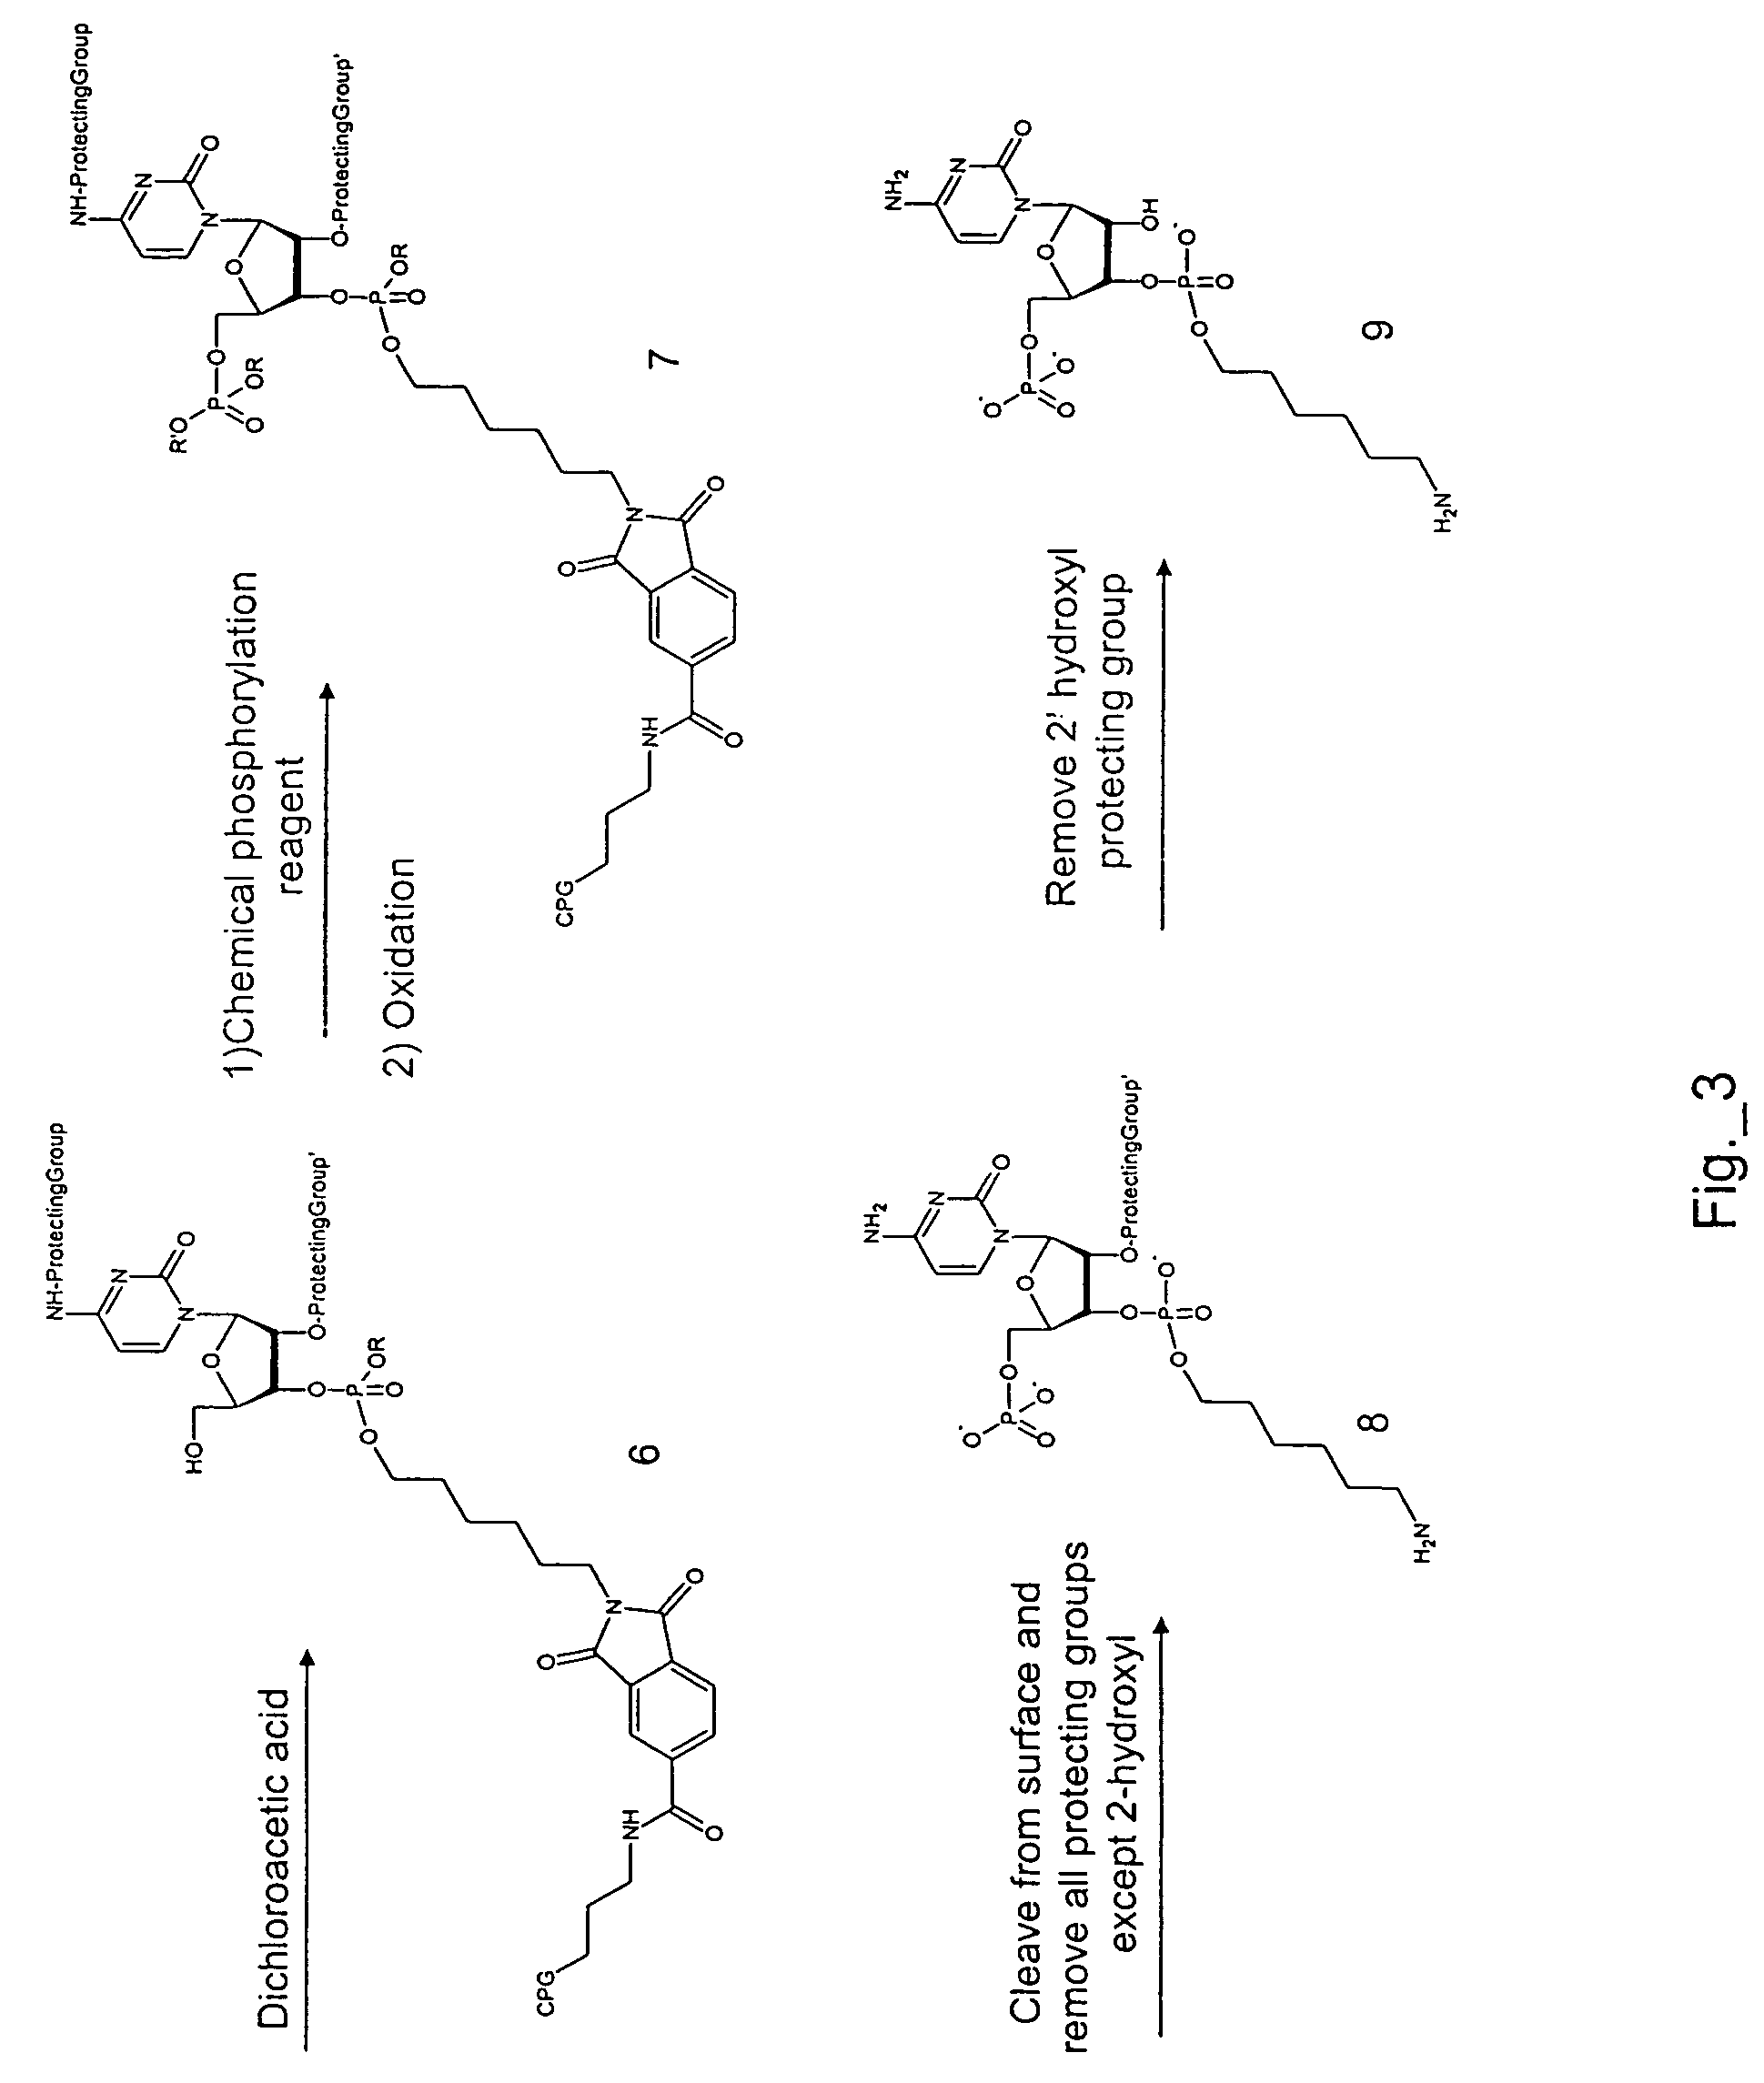 Labeled nucleotide composition